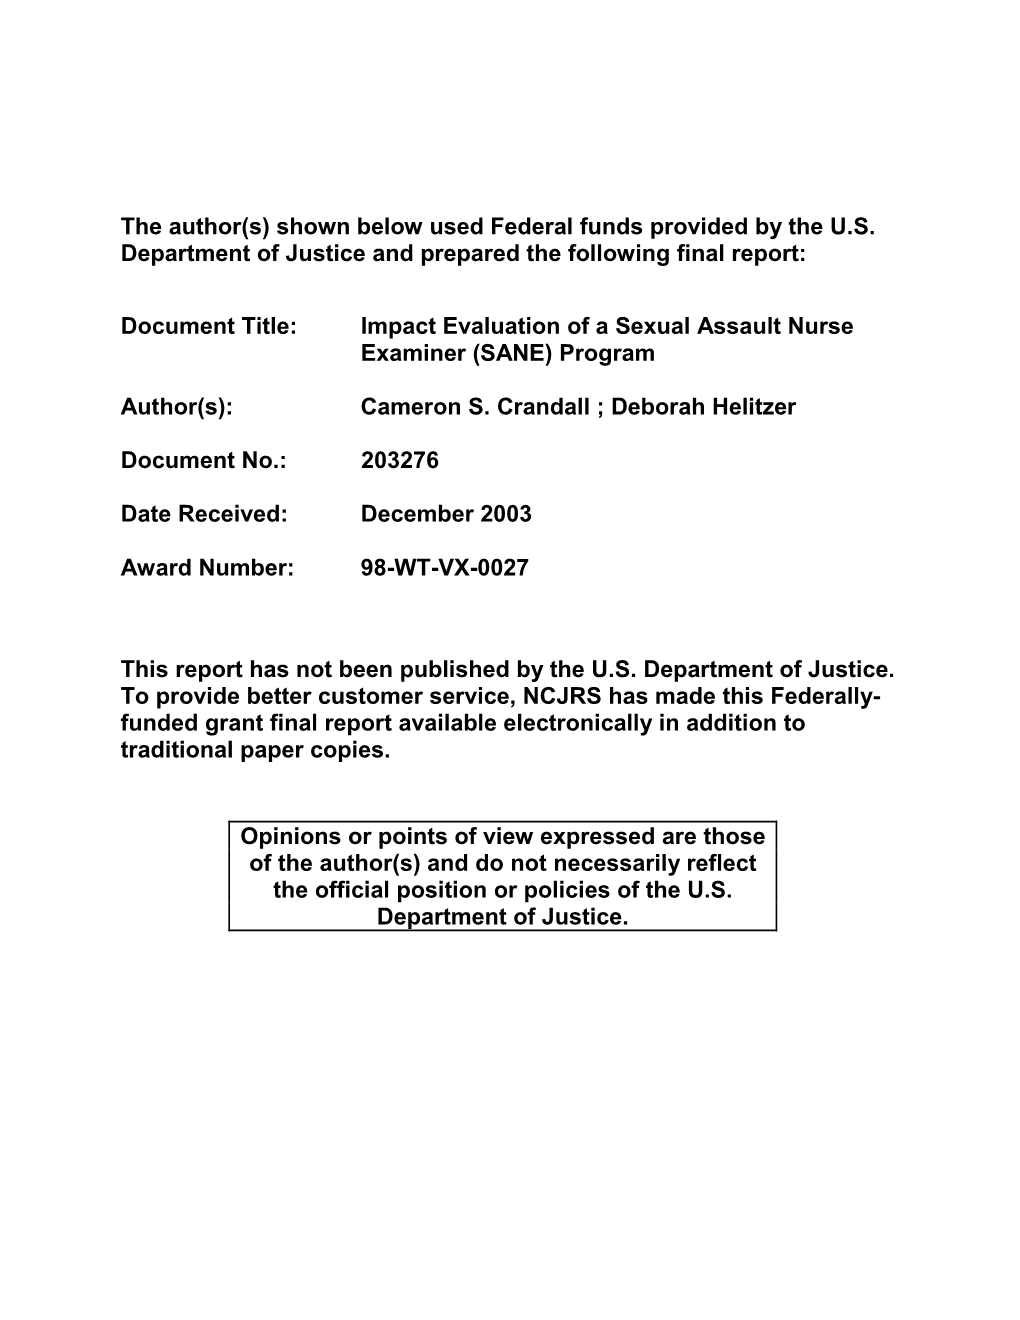 Impact Evaluation of a Sexual Assault Nurse Examiner (SANE) Program